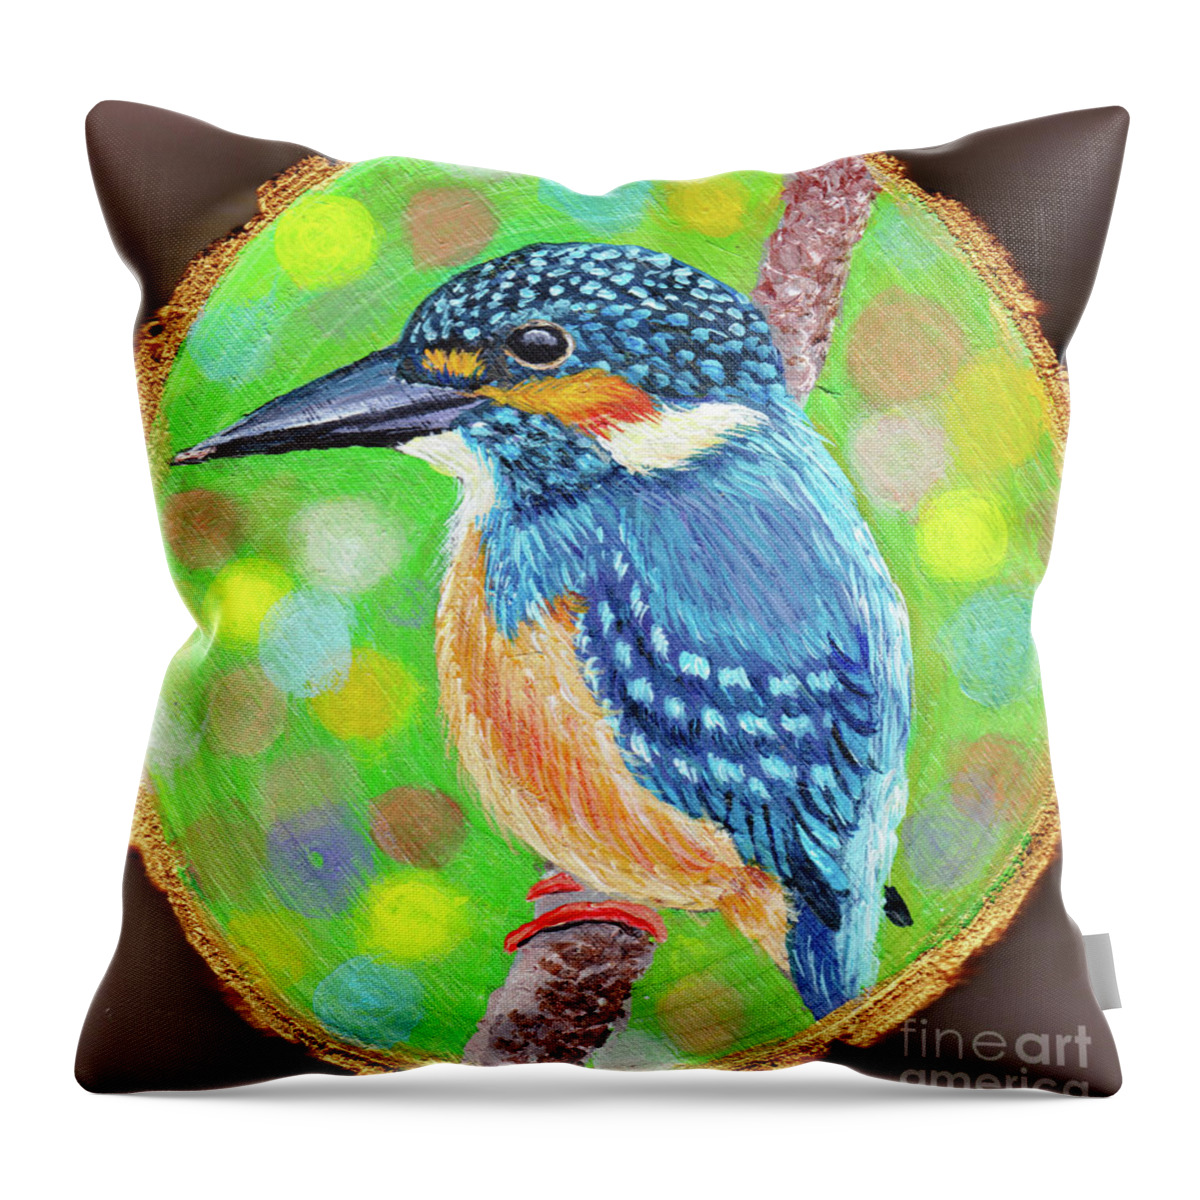 Acrylic Throw Pillow featuring the painting Kingfisher Ornament by Sudakshina Bhattacharya